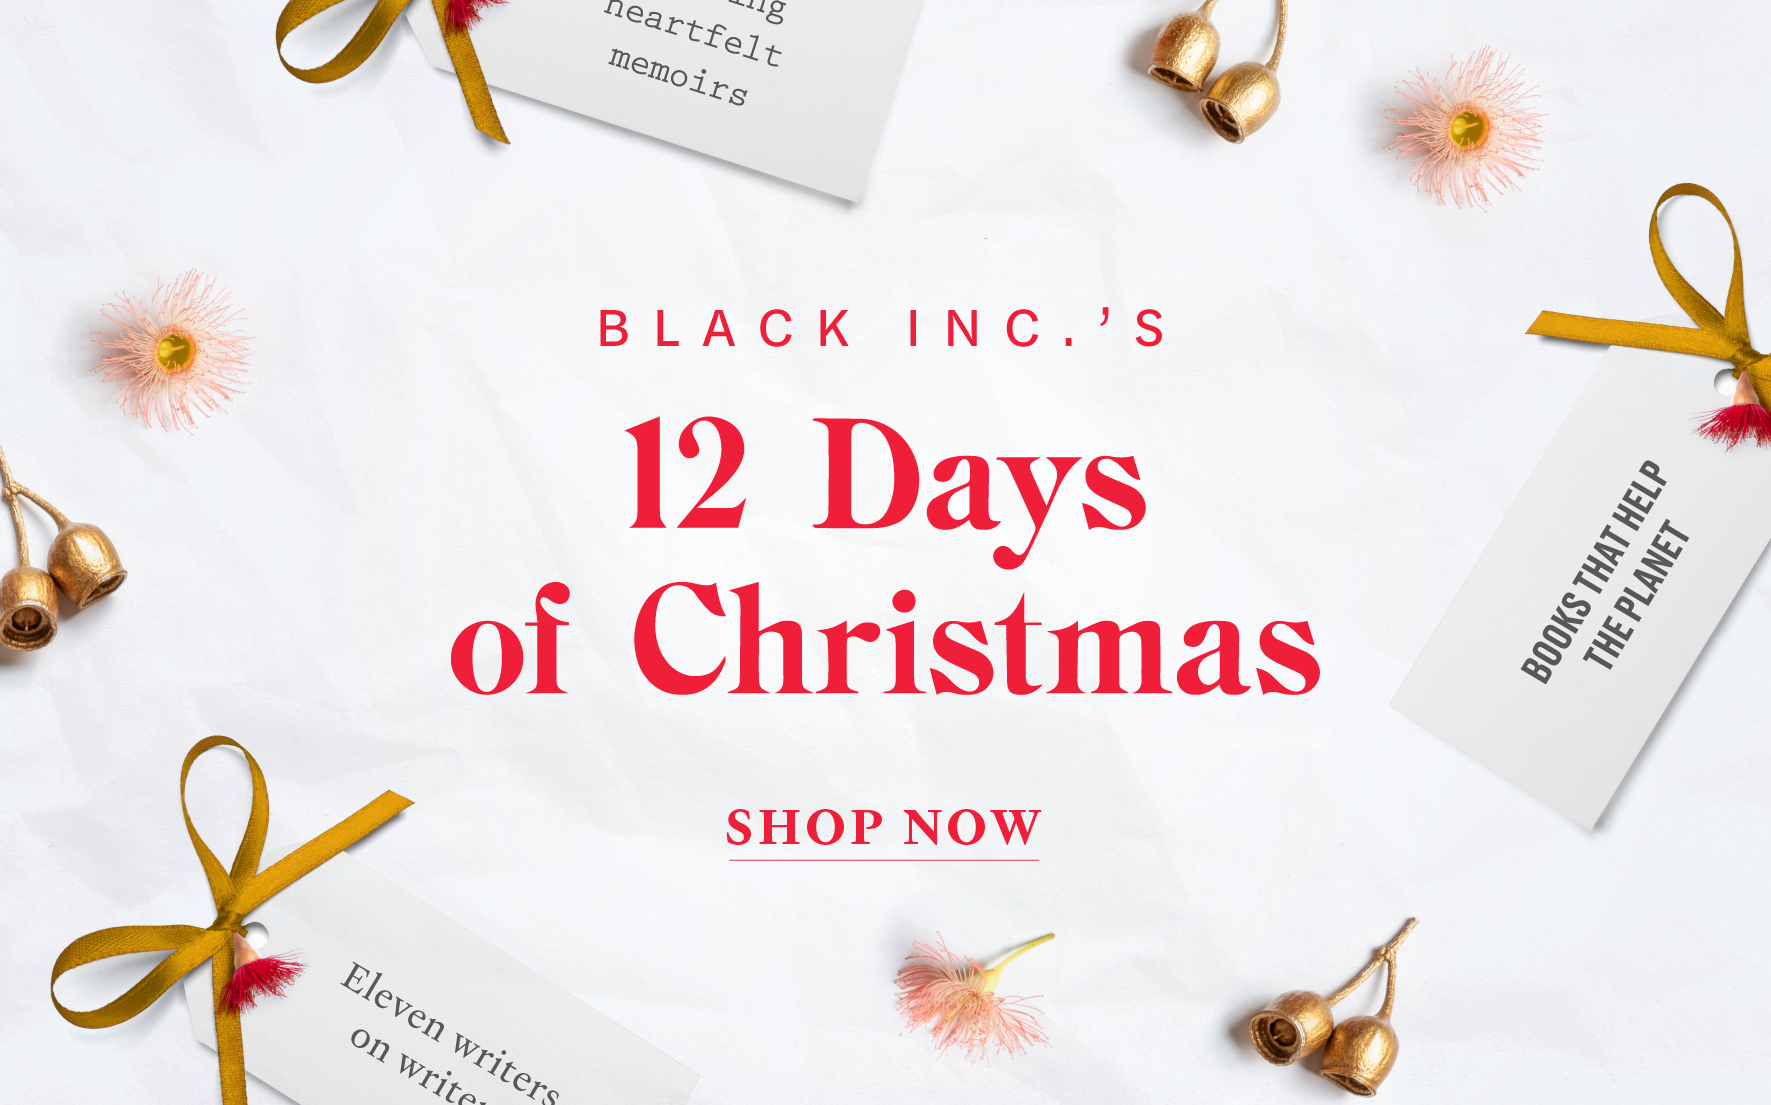 Black Inc.’s 12 Days of Christmas